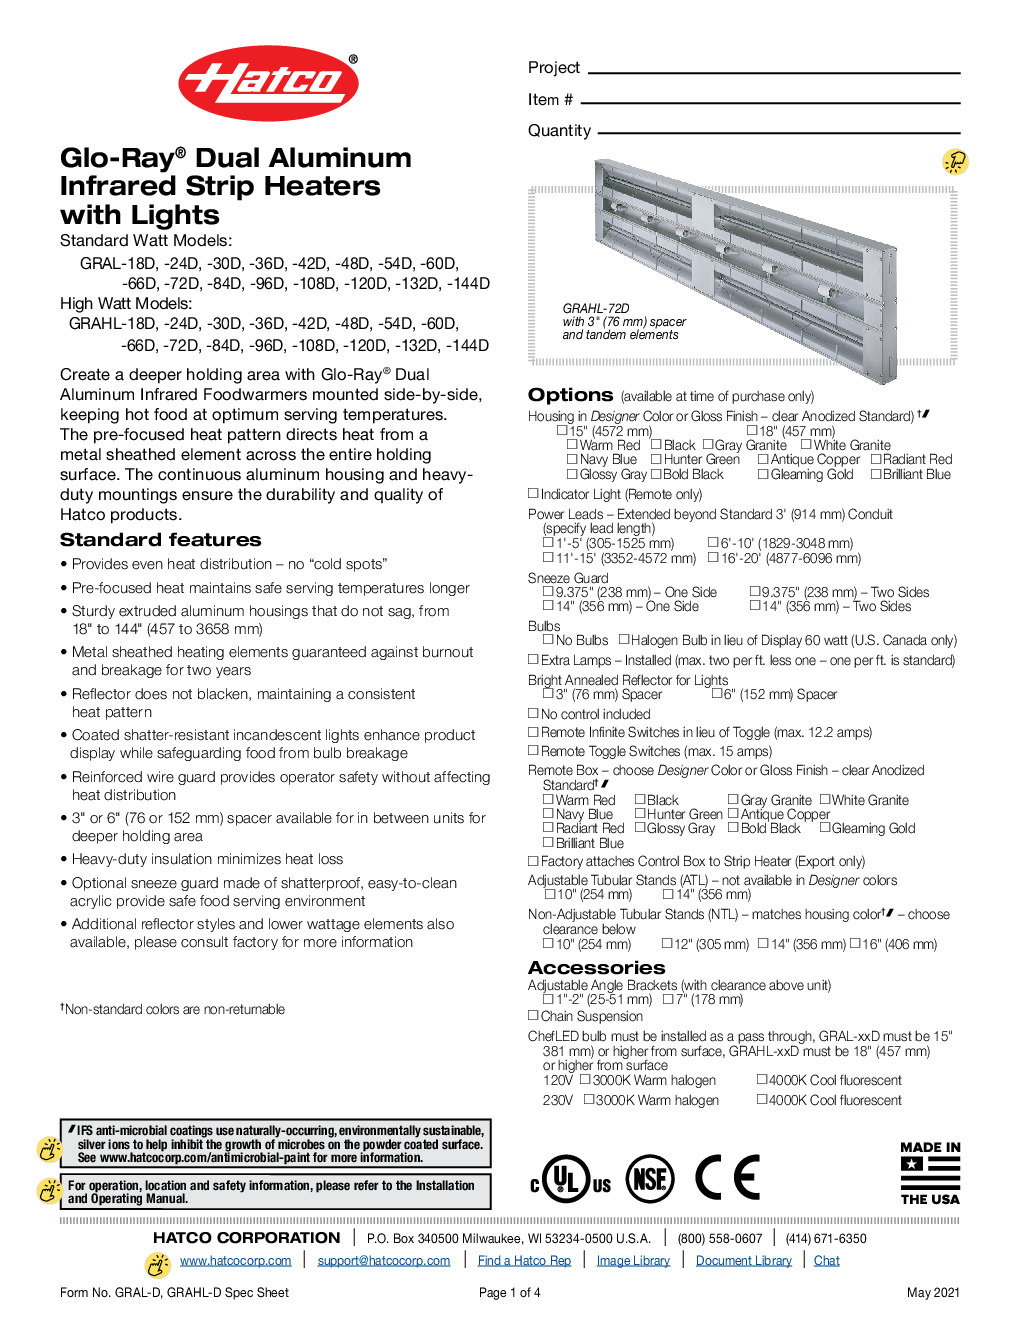 Hatco GRAHL-48D3-120QS Strip Type Heat Lamp